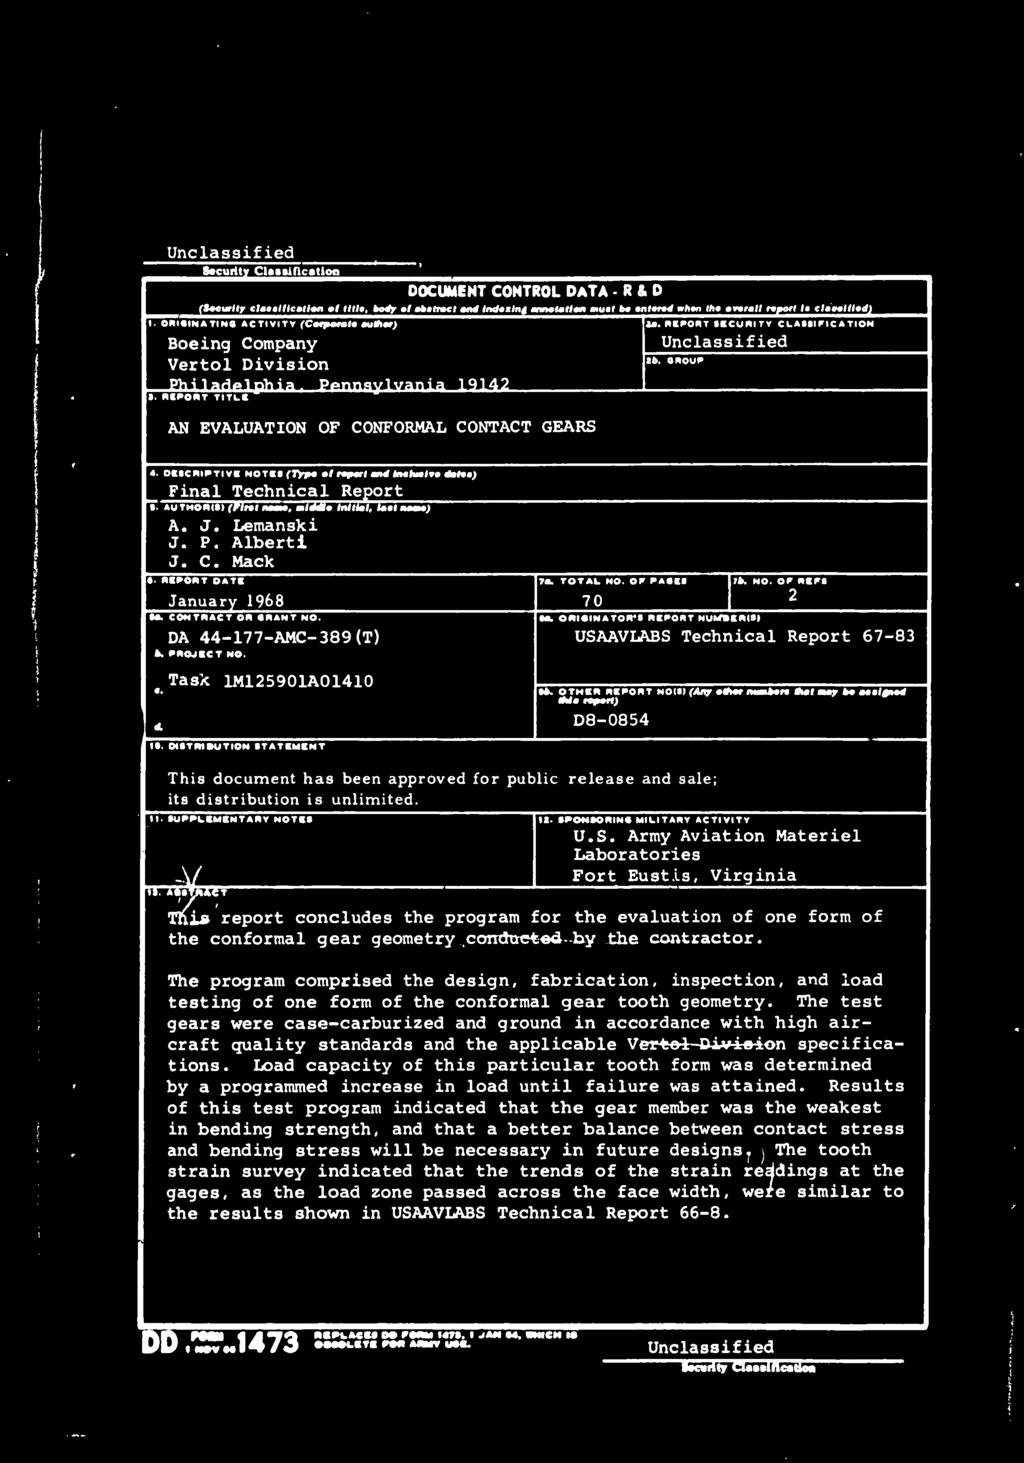 NIPOKT SBCUKITT CLAKICICATION Unclassified 4. DCtcniPTIVC HOT»» (Trp*»I itpttl mt4 Inthmlw *U»m) Final Technical Report 7 «UTMONItlfFlnlMaw, 533R (nlltol, latlmmm») A. J. Lemanski J. P. Albert! J. C. Mack January 1968 M, COM1 DA 44-177-AMC-389(T) k.